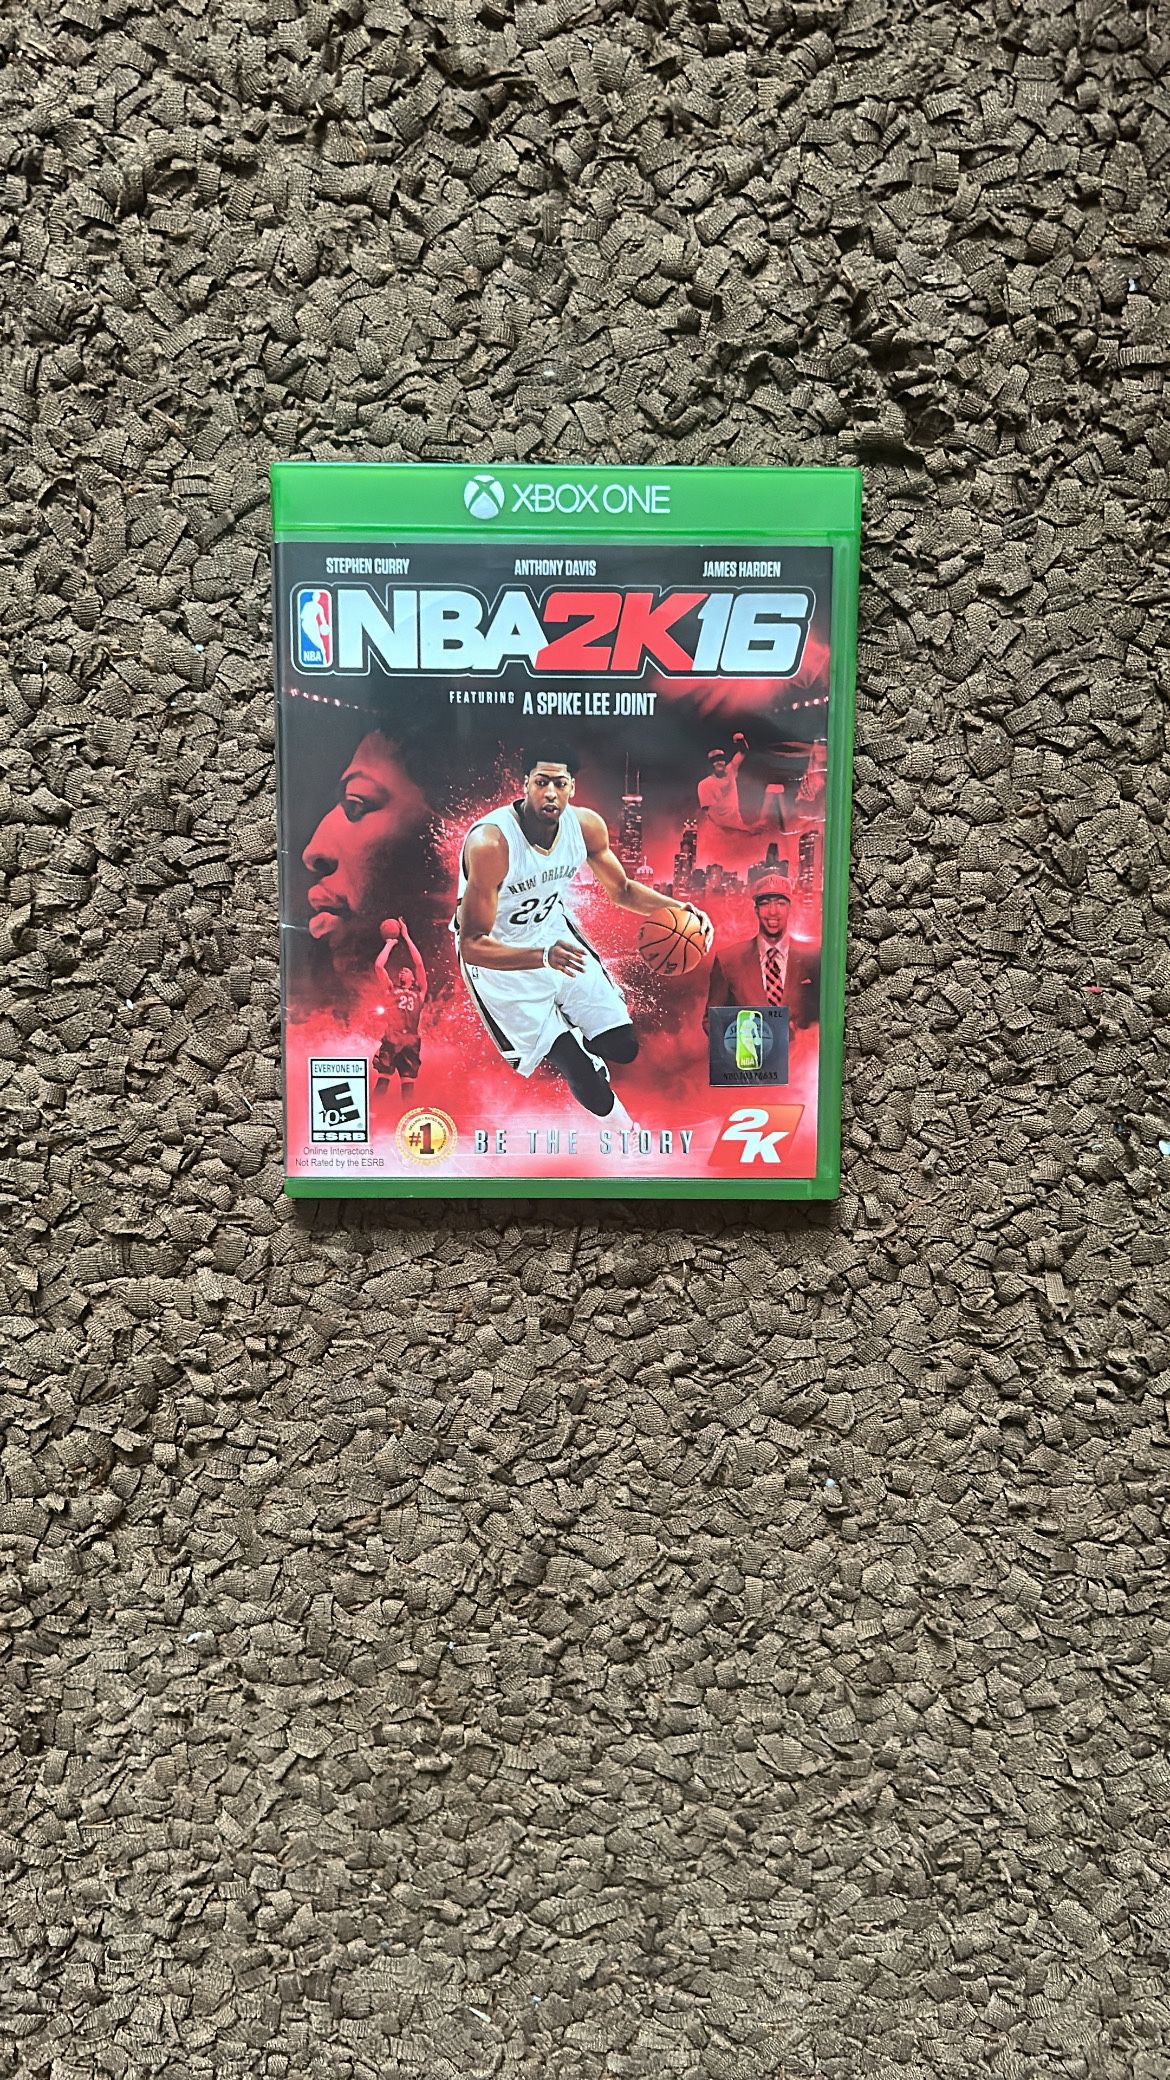 Xbox NBA 2K16